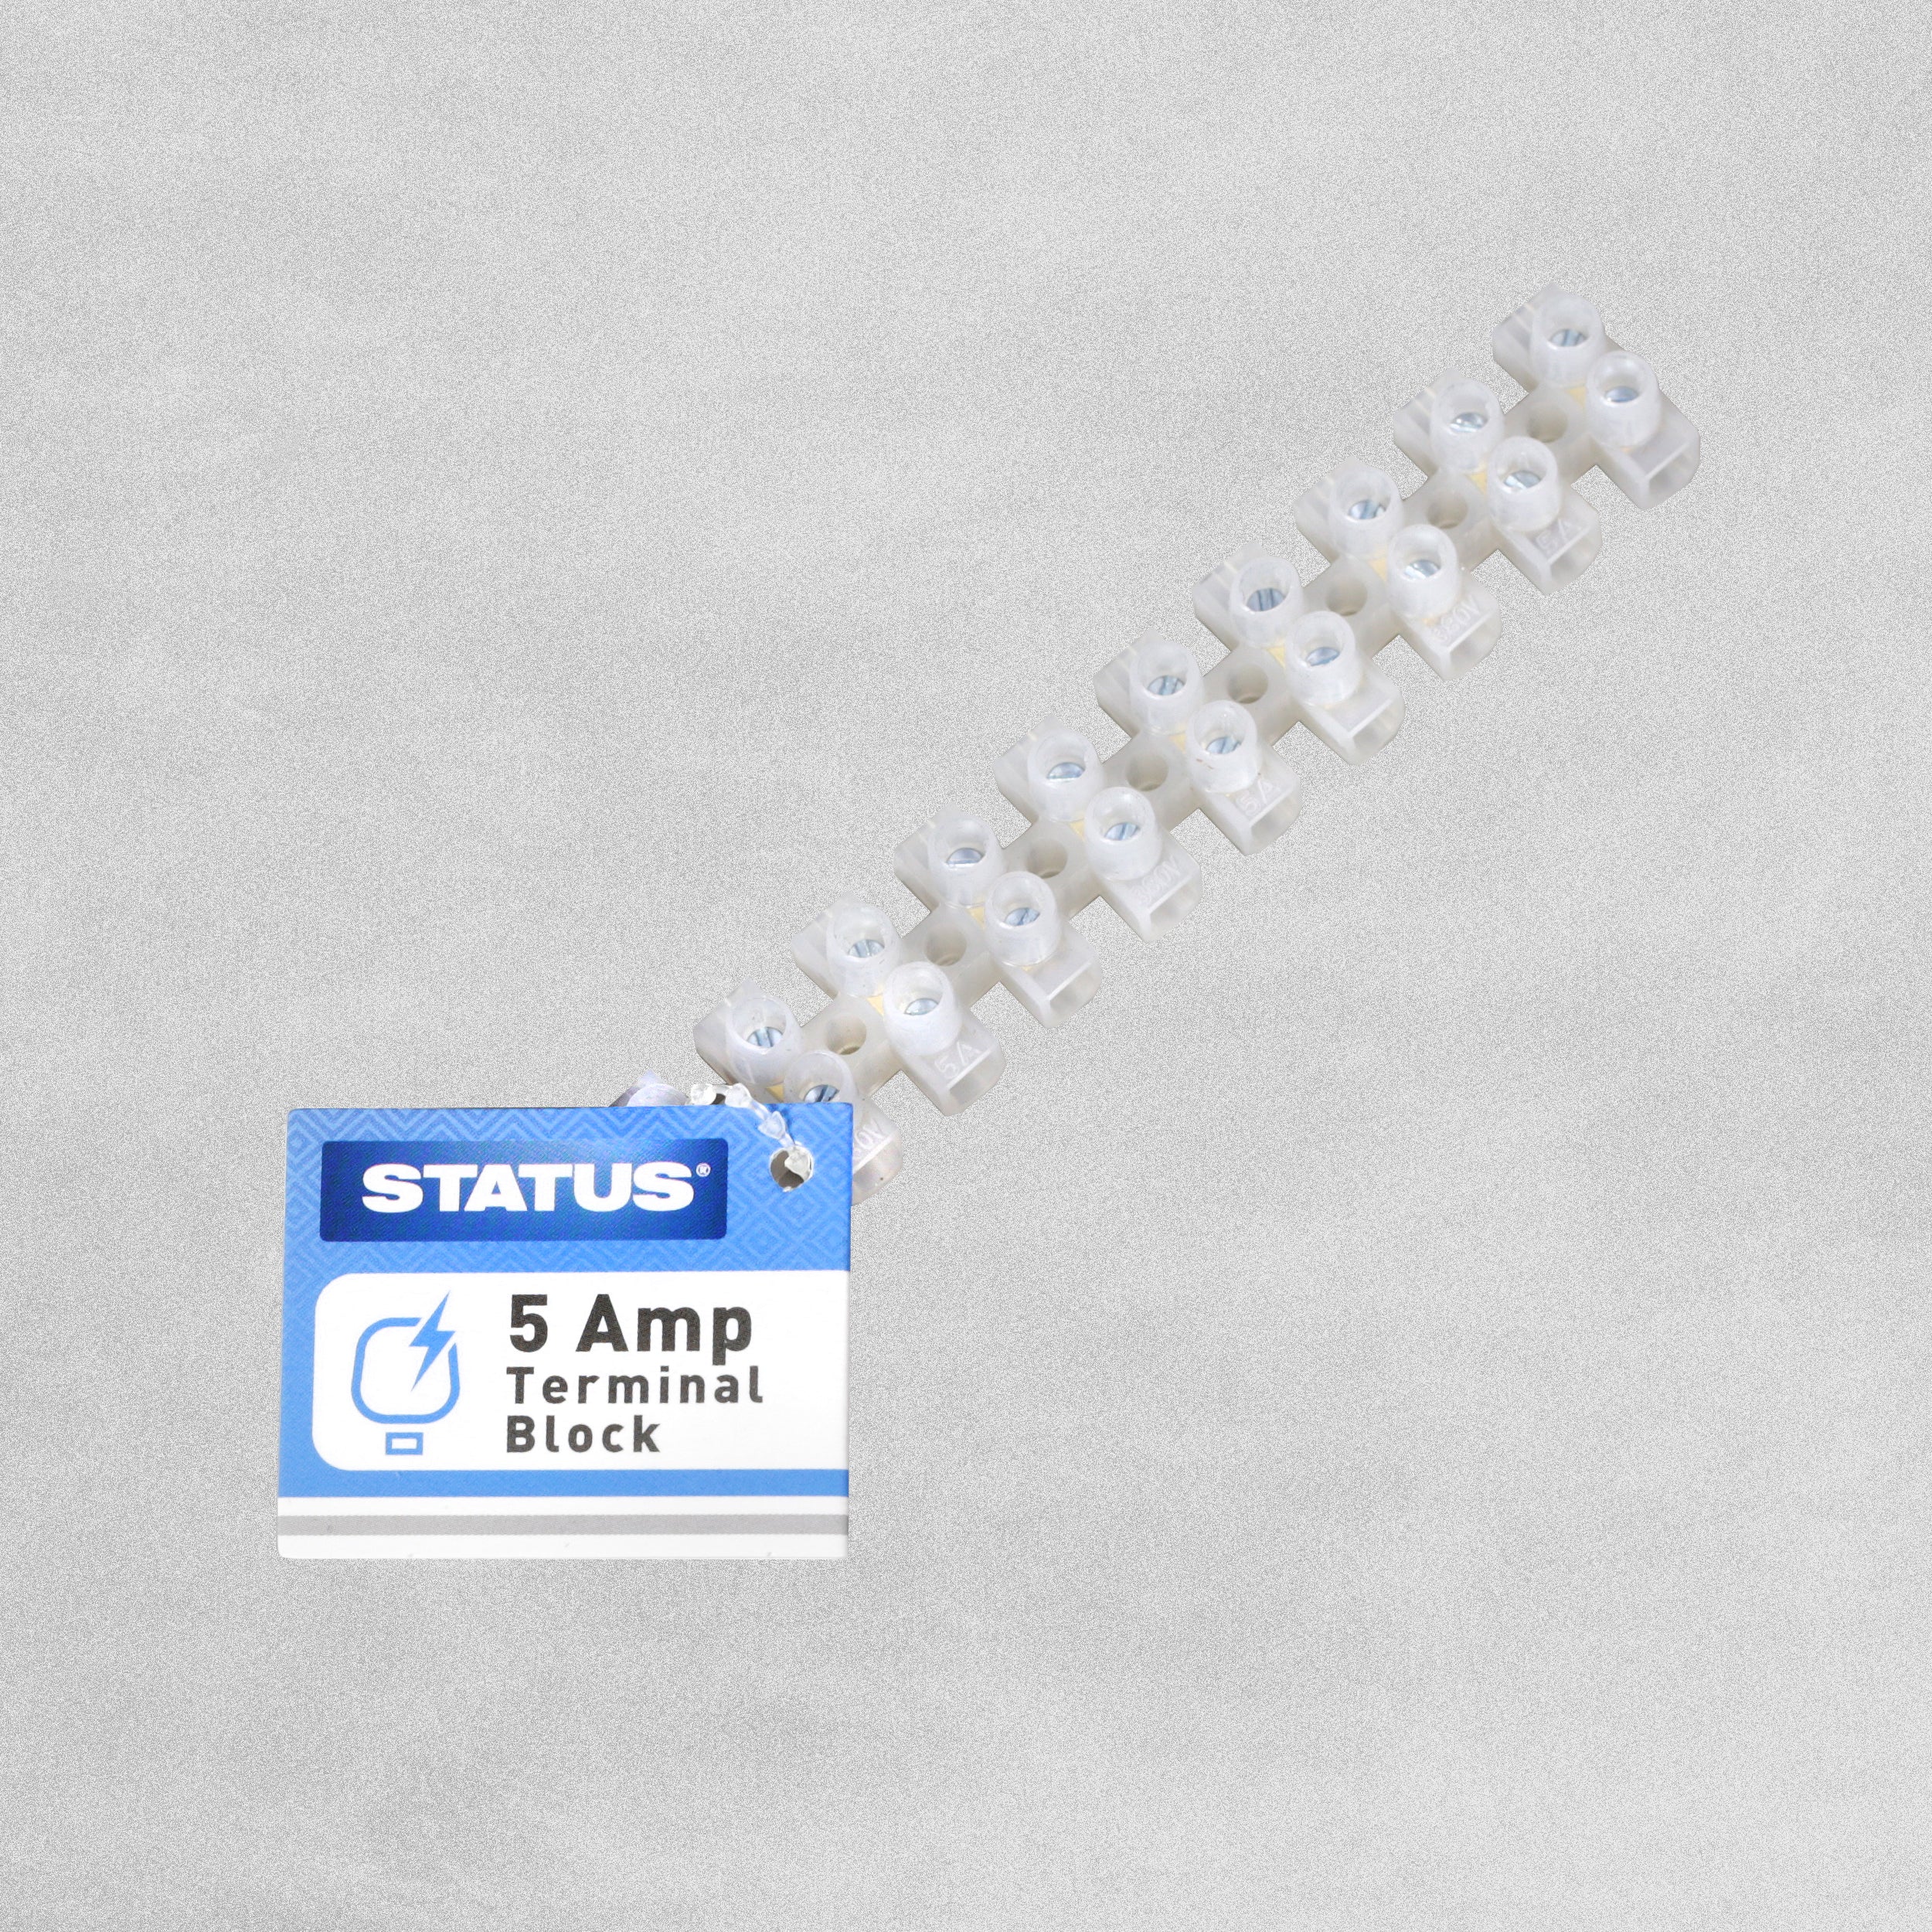 Status Terminal Block Strip - 5 Amp